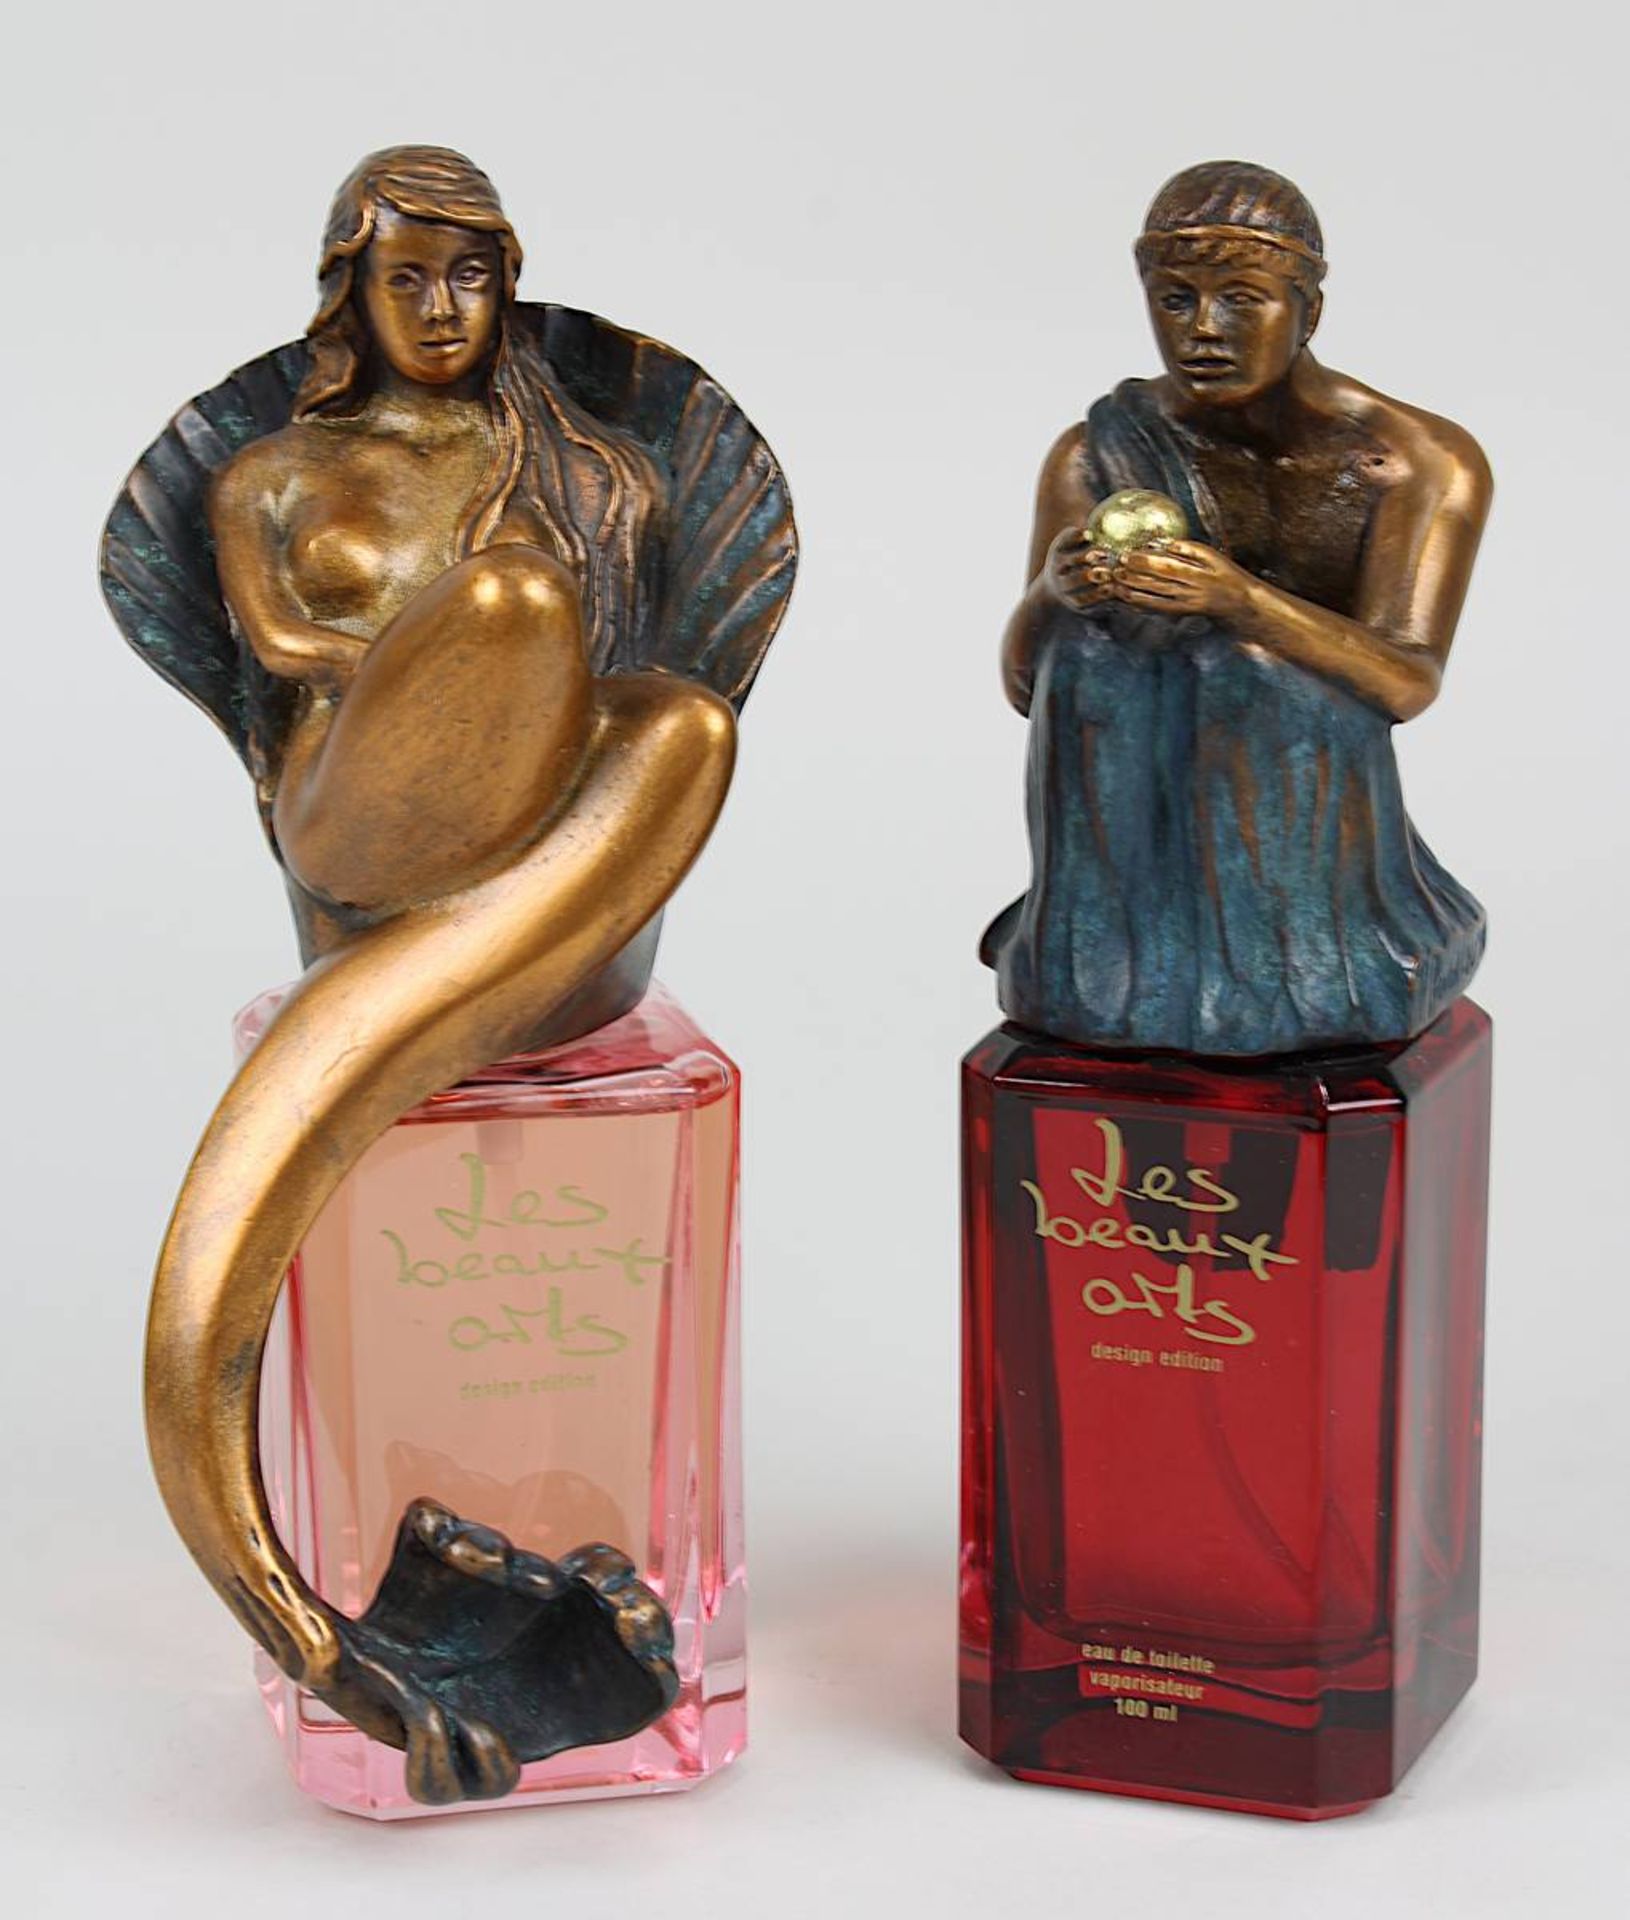 Guerresi, Patrizia (geb. Pove der Grappa 1951), Parfüm-Sammlerflakons Les beaux arts design